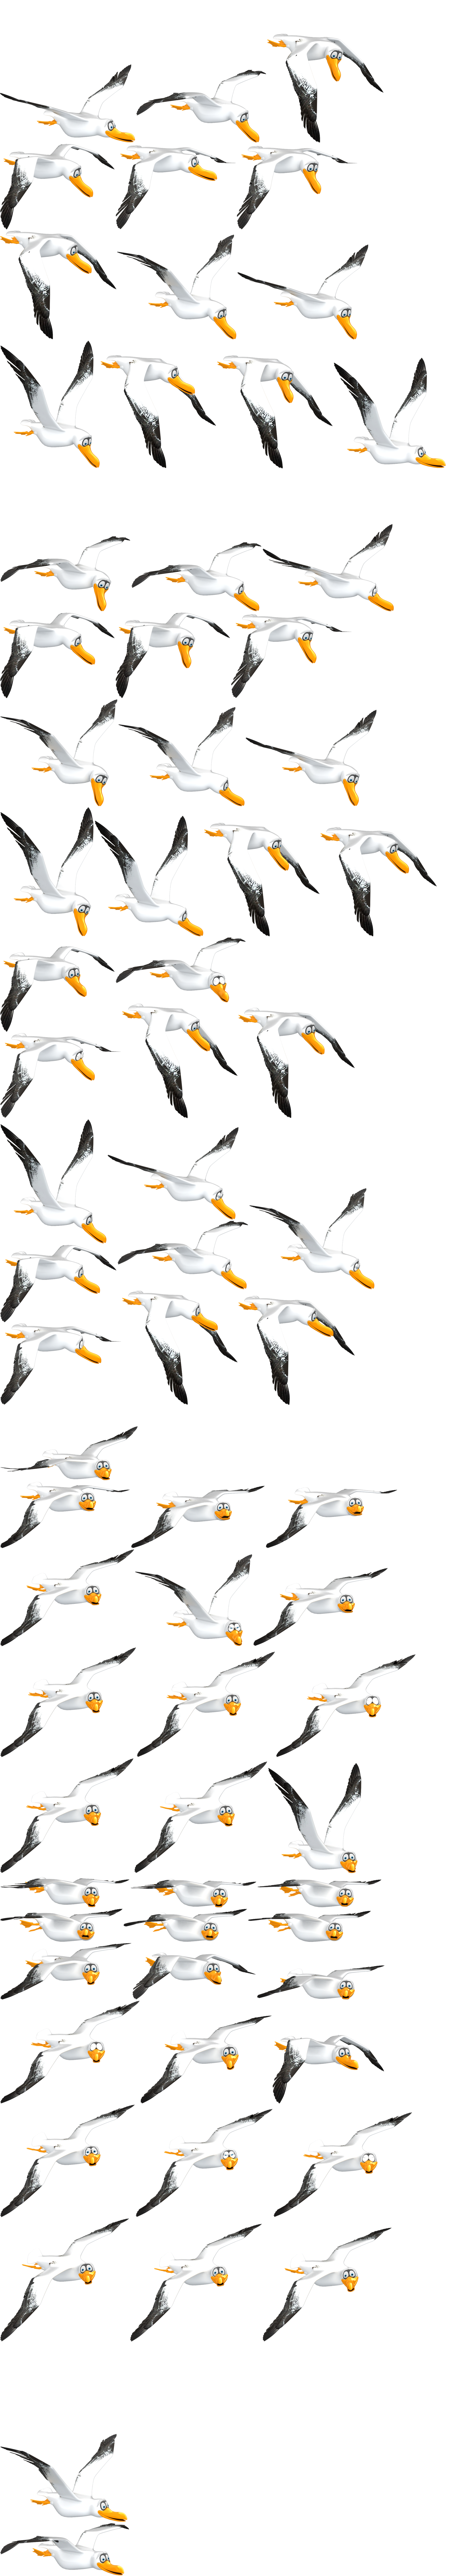 KID PIX 5: The STEAM Edition - Seagull